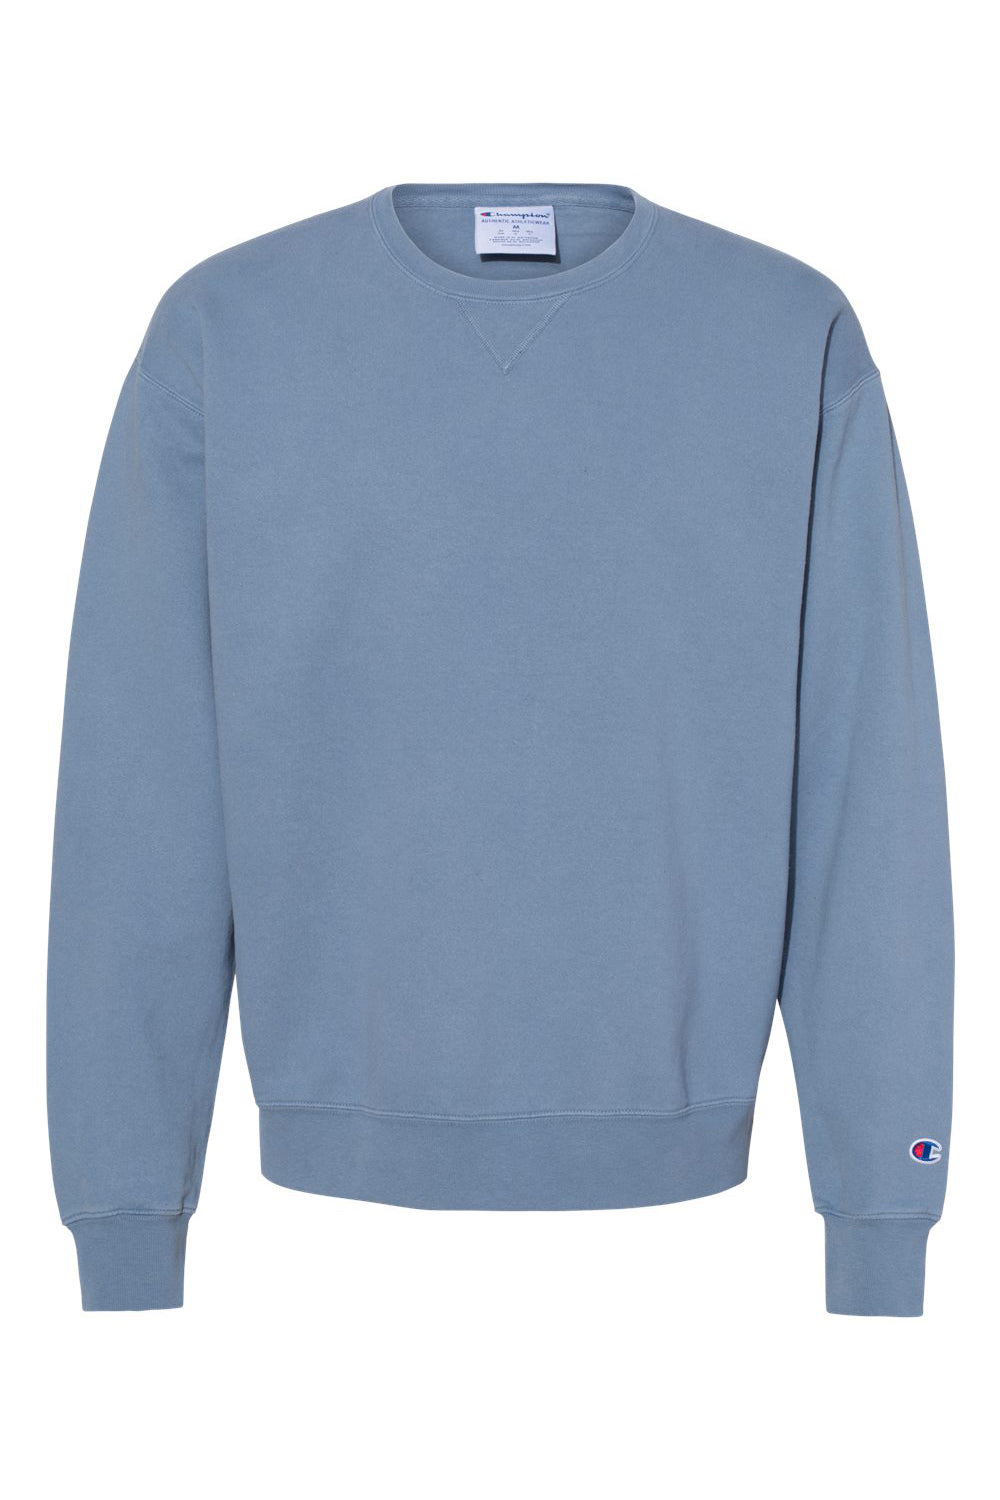 Champion CD400 Mens Garment Dyed Crewneck Sweatshirt Saltwater Blue Flat Front